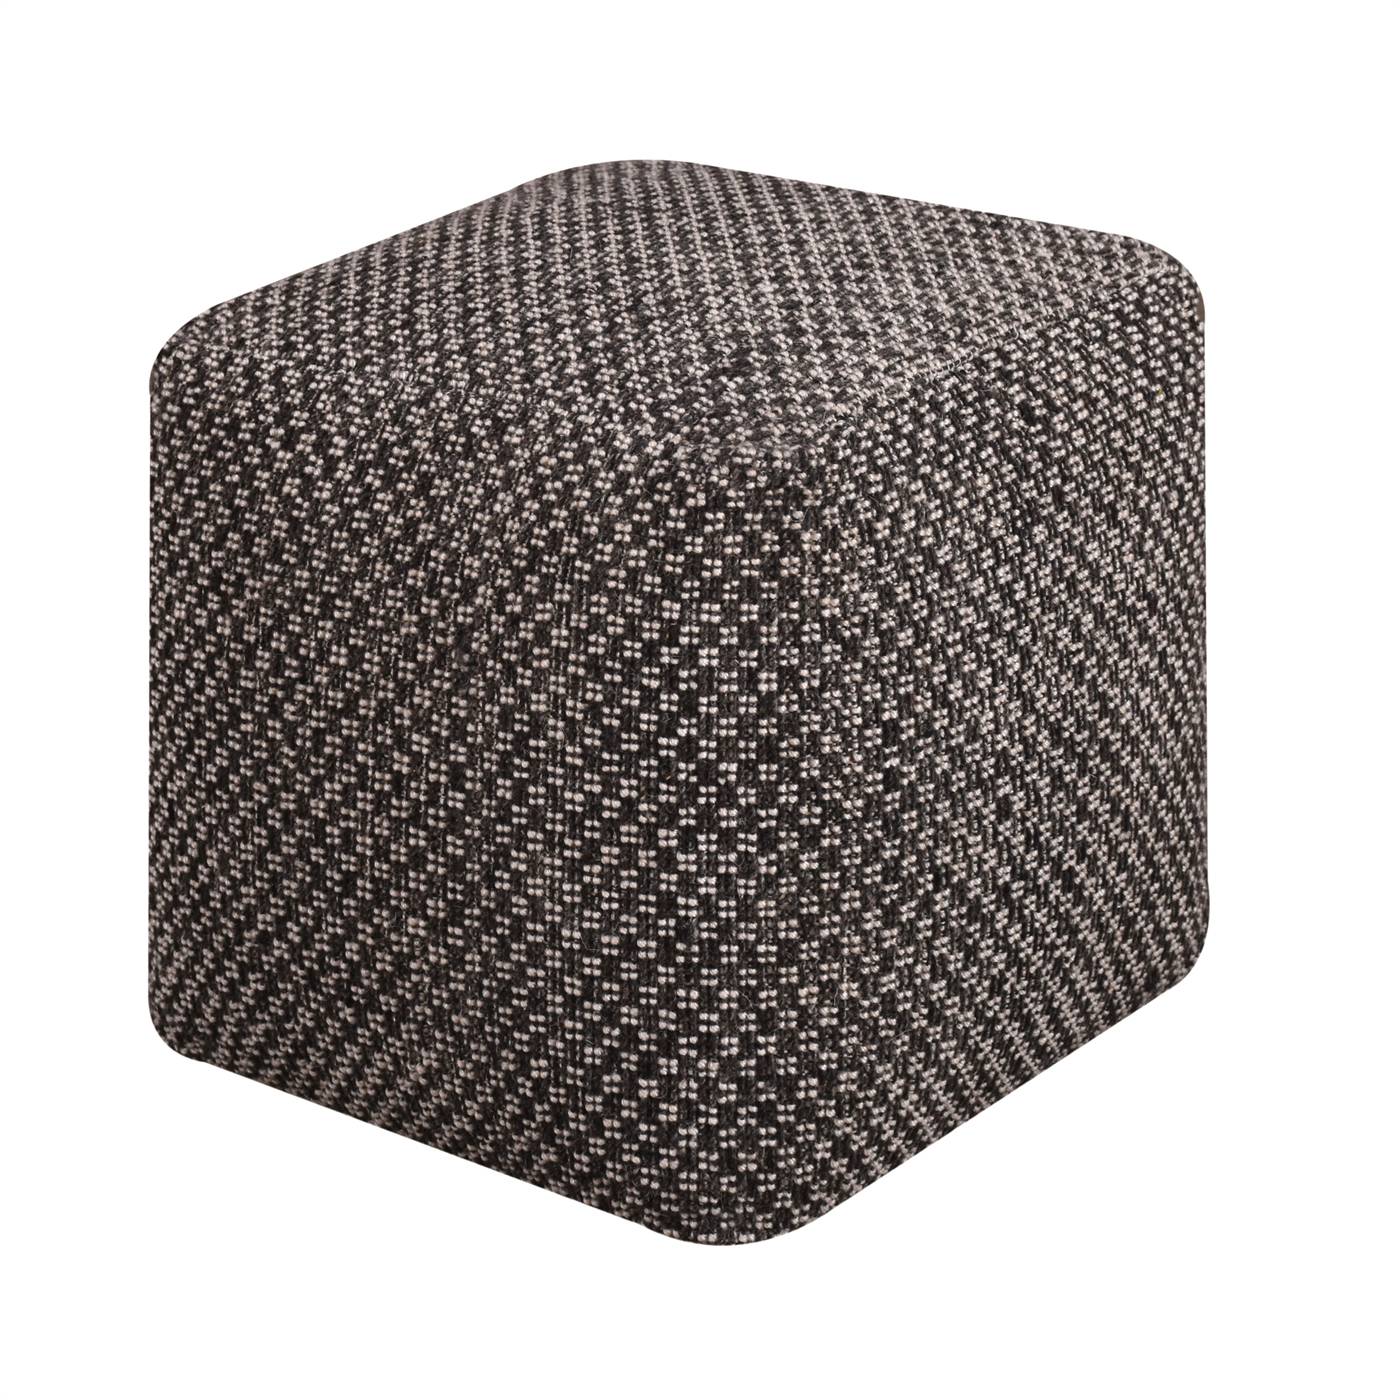 Edmunds-II Pouf, 40x40x40 cm, Charcoal, Wool, Hand Woven, Handwoven, Flat Weave